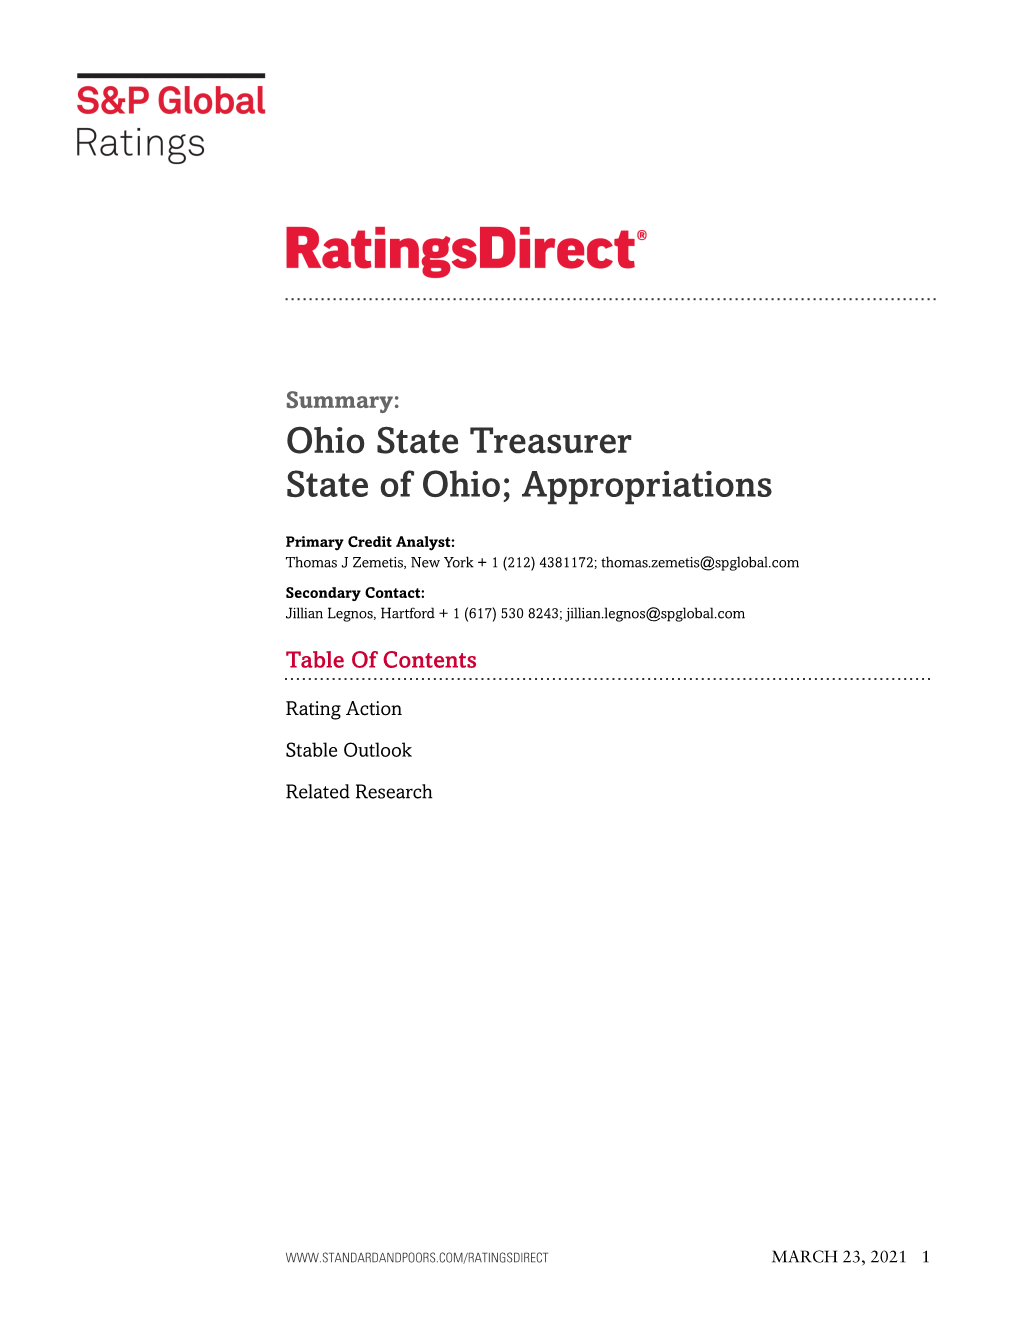 Ohio State Treasurer State of Ohio; Appropriations